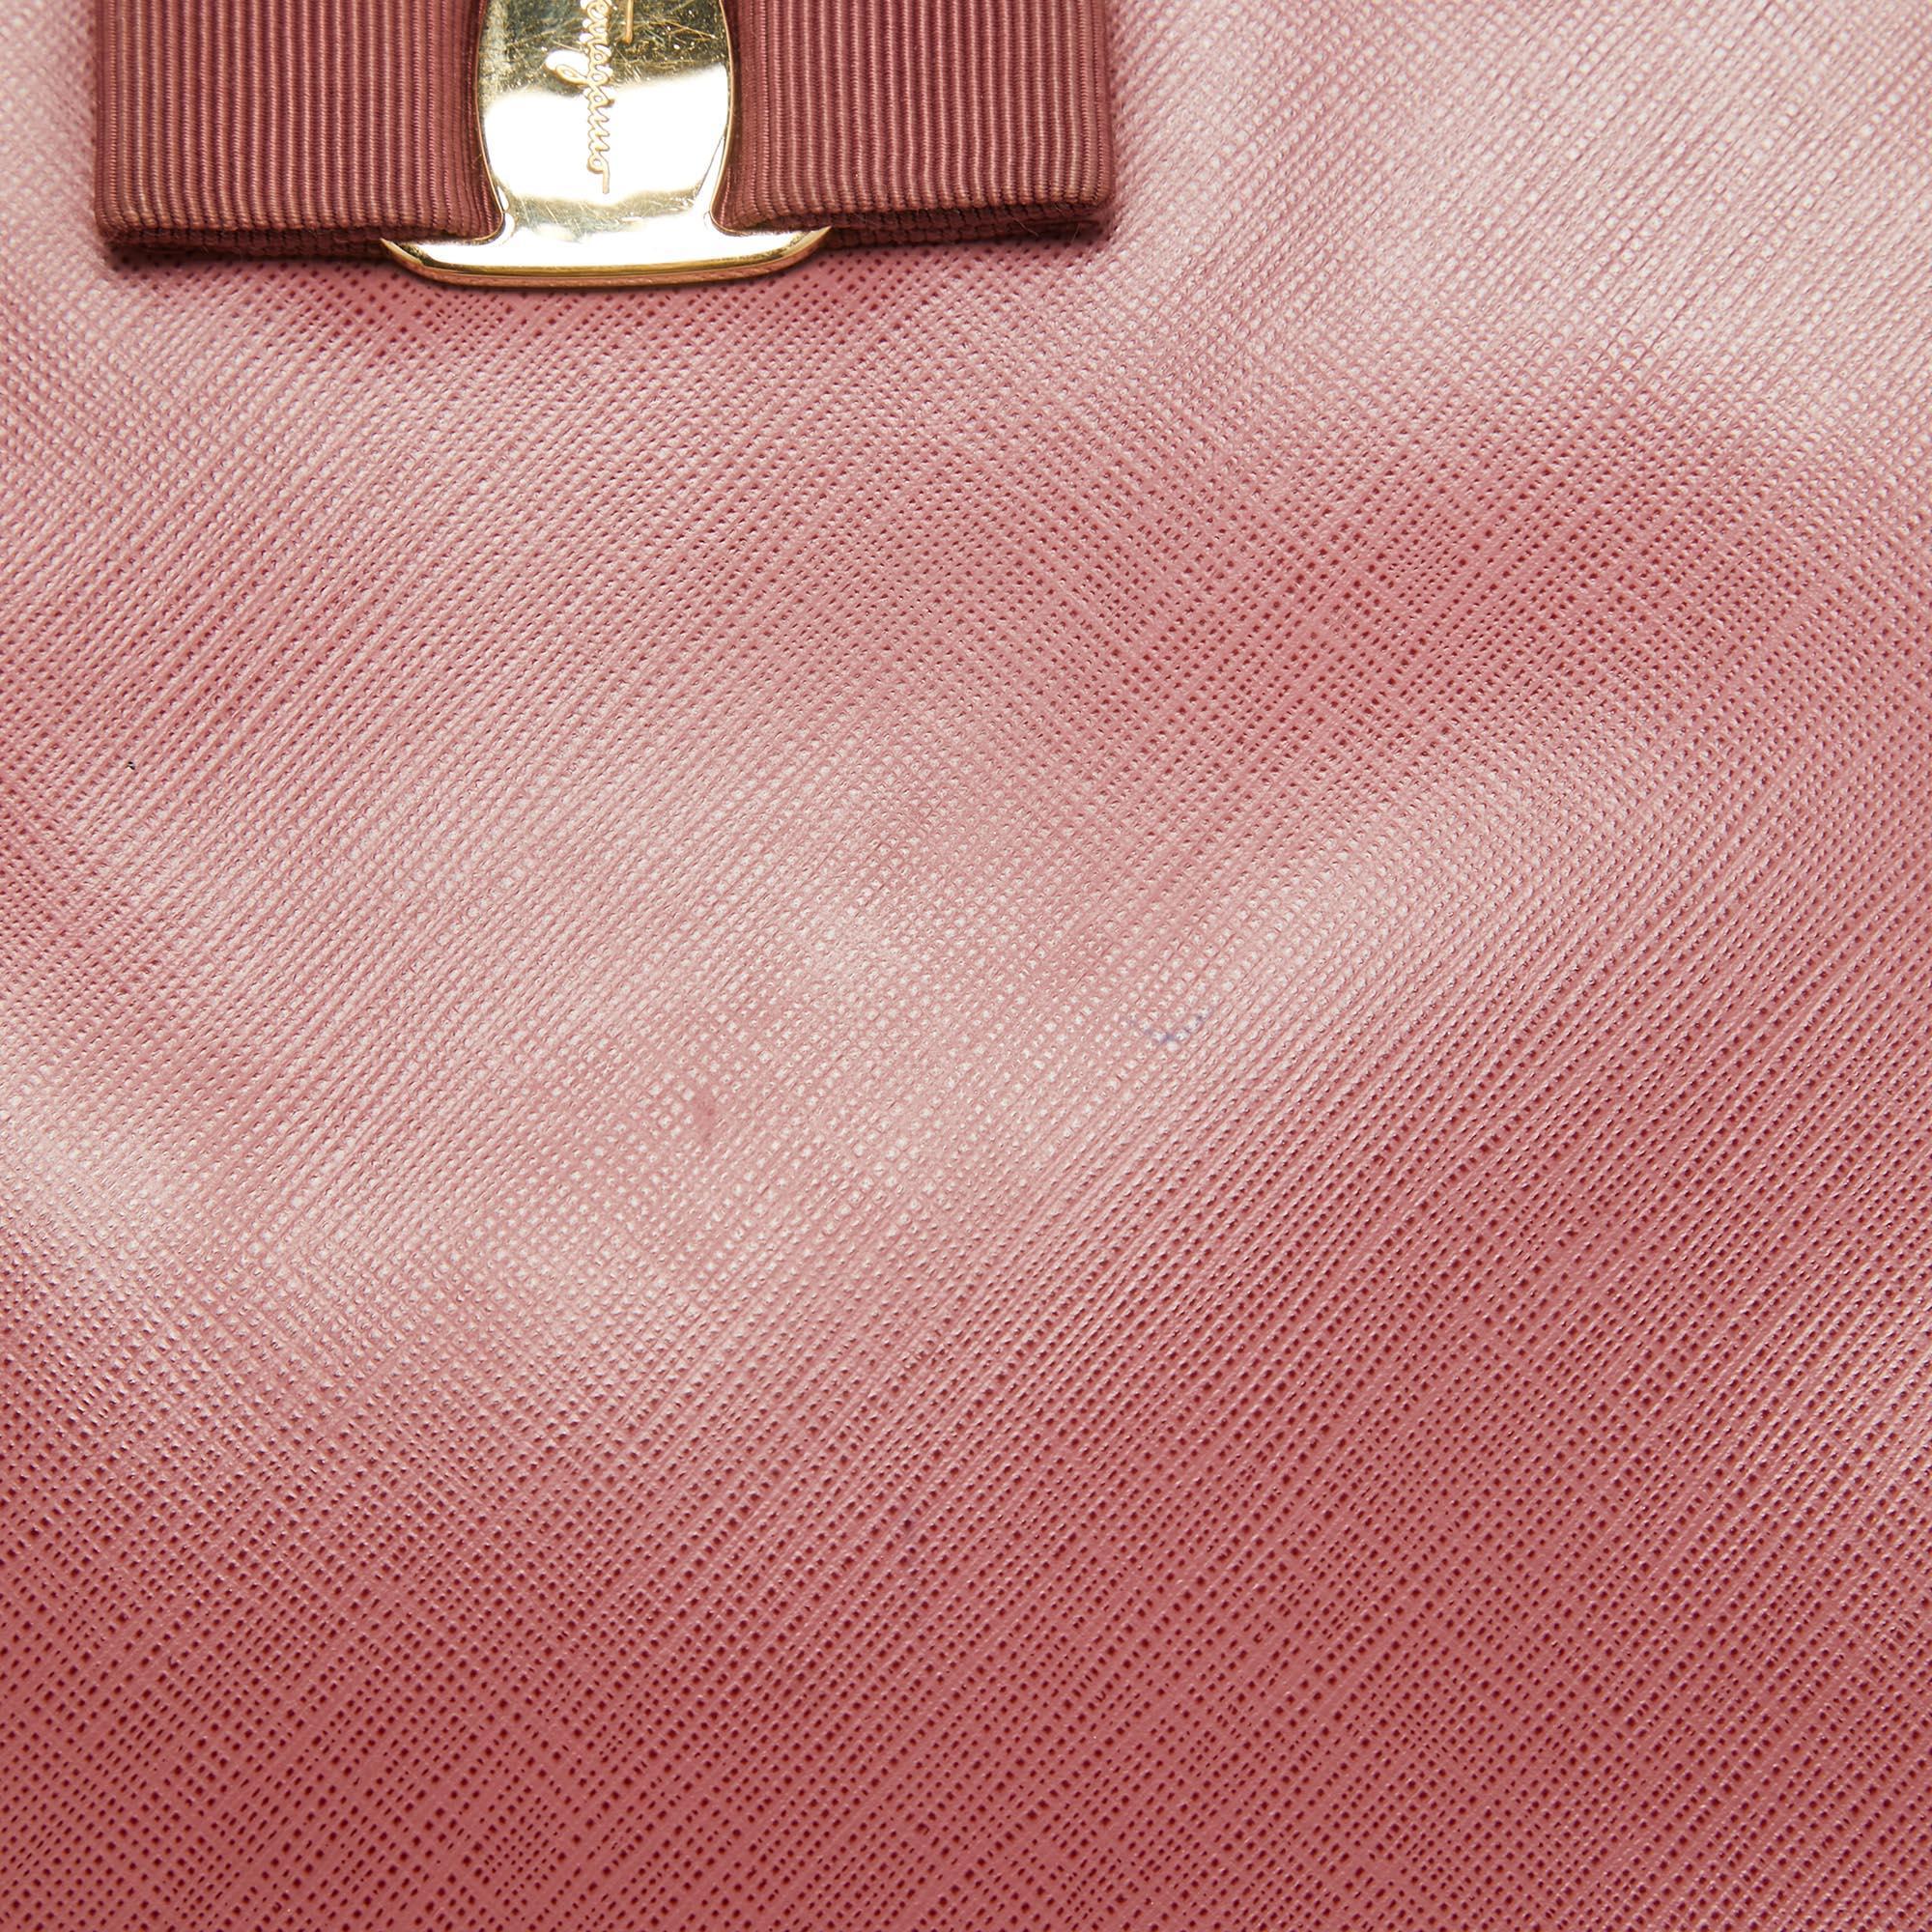 Salvatore Ferragamo Dark Pink Leather Shoulder Bag 10